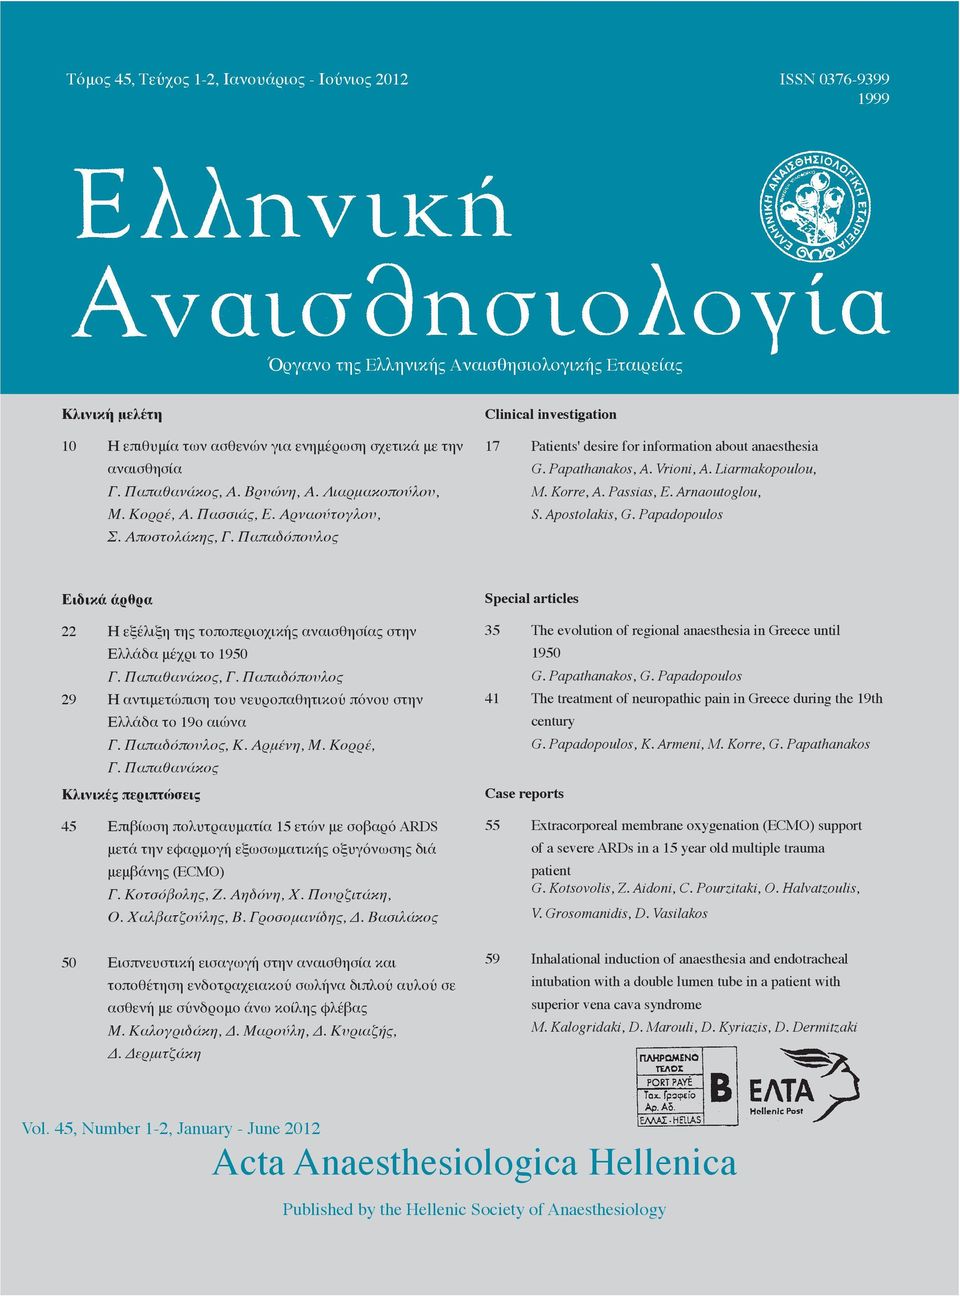 Papathanakos, A. Vrioni, A. Liarmakopoulou, M. Korre, A. Passias, E. Arnaoutoglou, S. Apostolakis, G. Papadopoulos Ειδικά άρθρα 22 Η εξέλιξη της τοποπεριοχικής αναισθησίας στην Ελλάδα μέχρι το 1950 Γ.